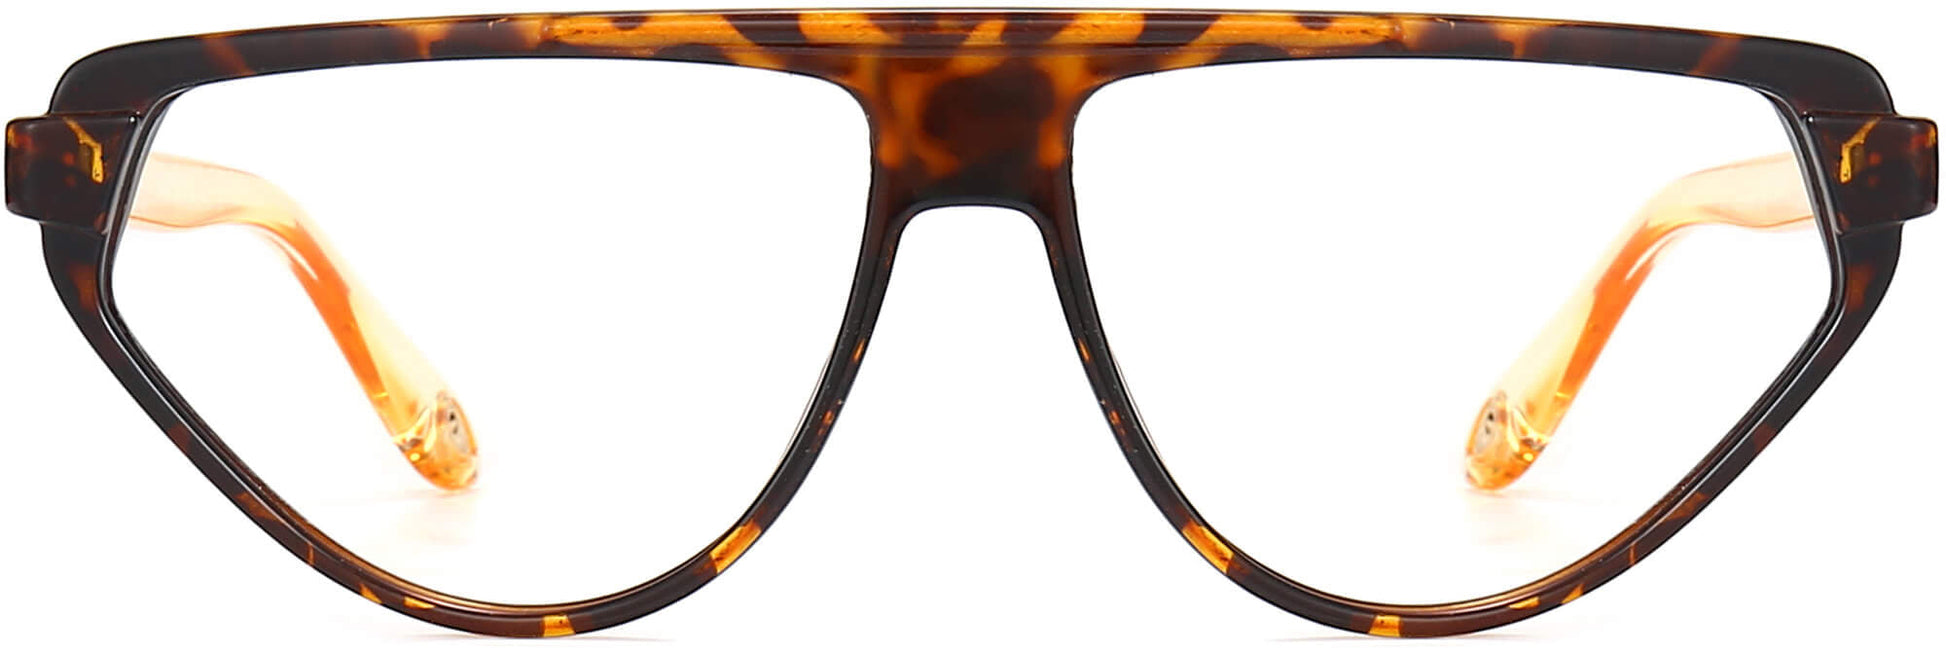 Alaina Cateye Tortoise Eyeglasses from ANRRI, front view